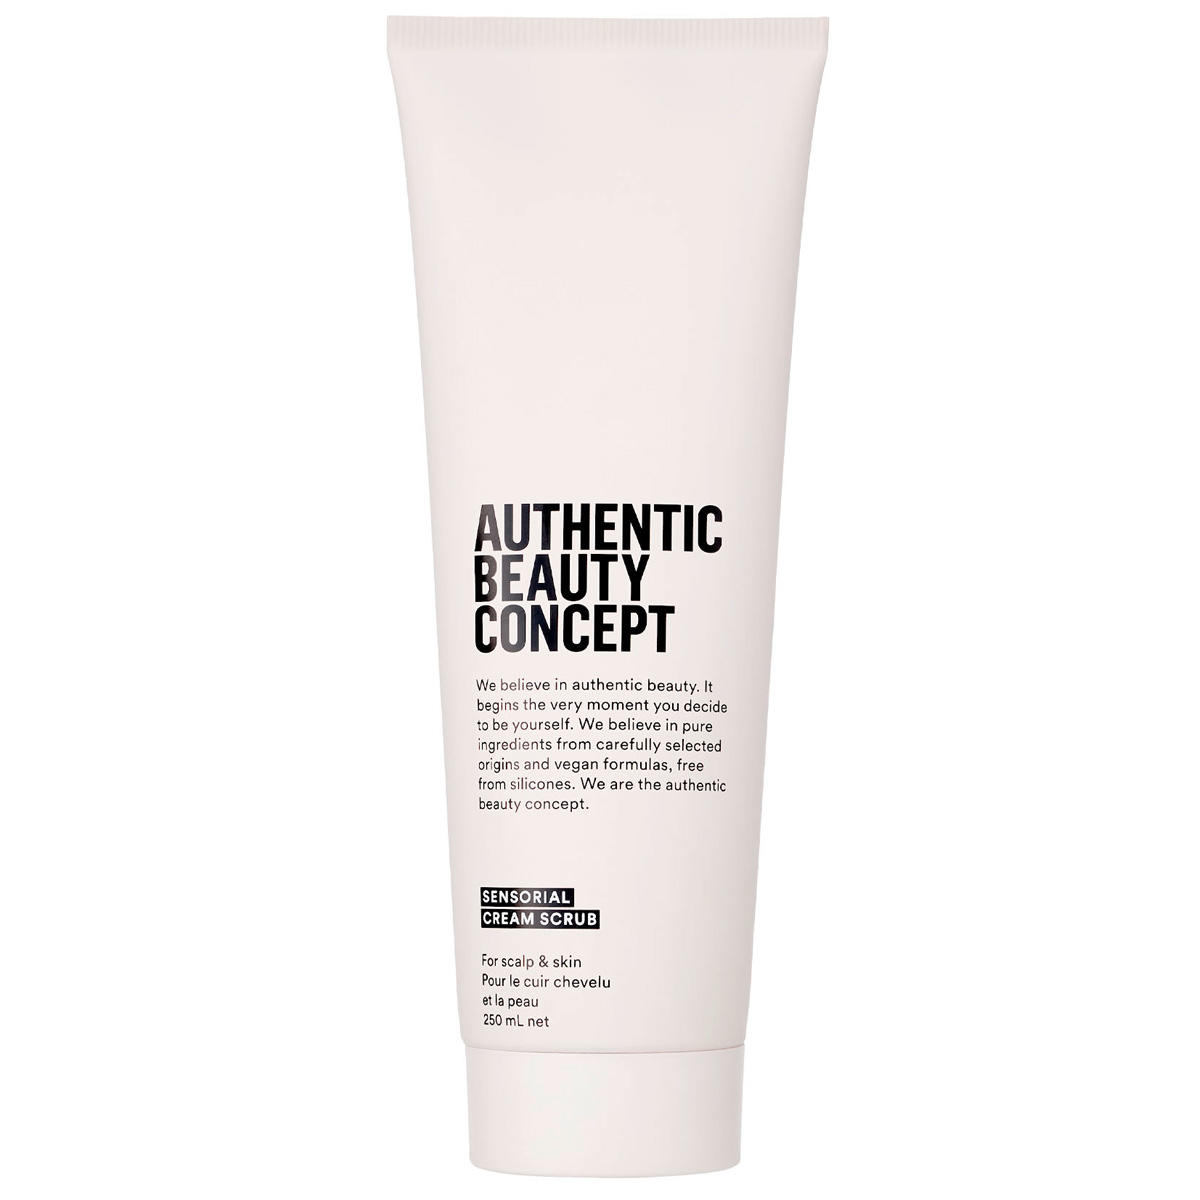 Authentic Beauty Concept Sensorial Cream Scrub 250 ml - 1